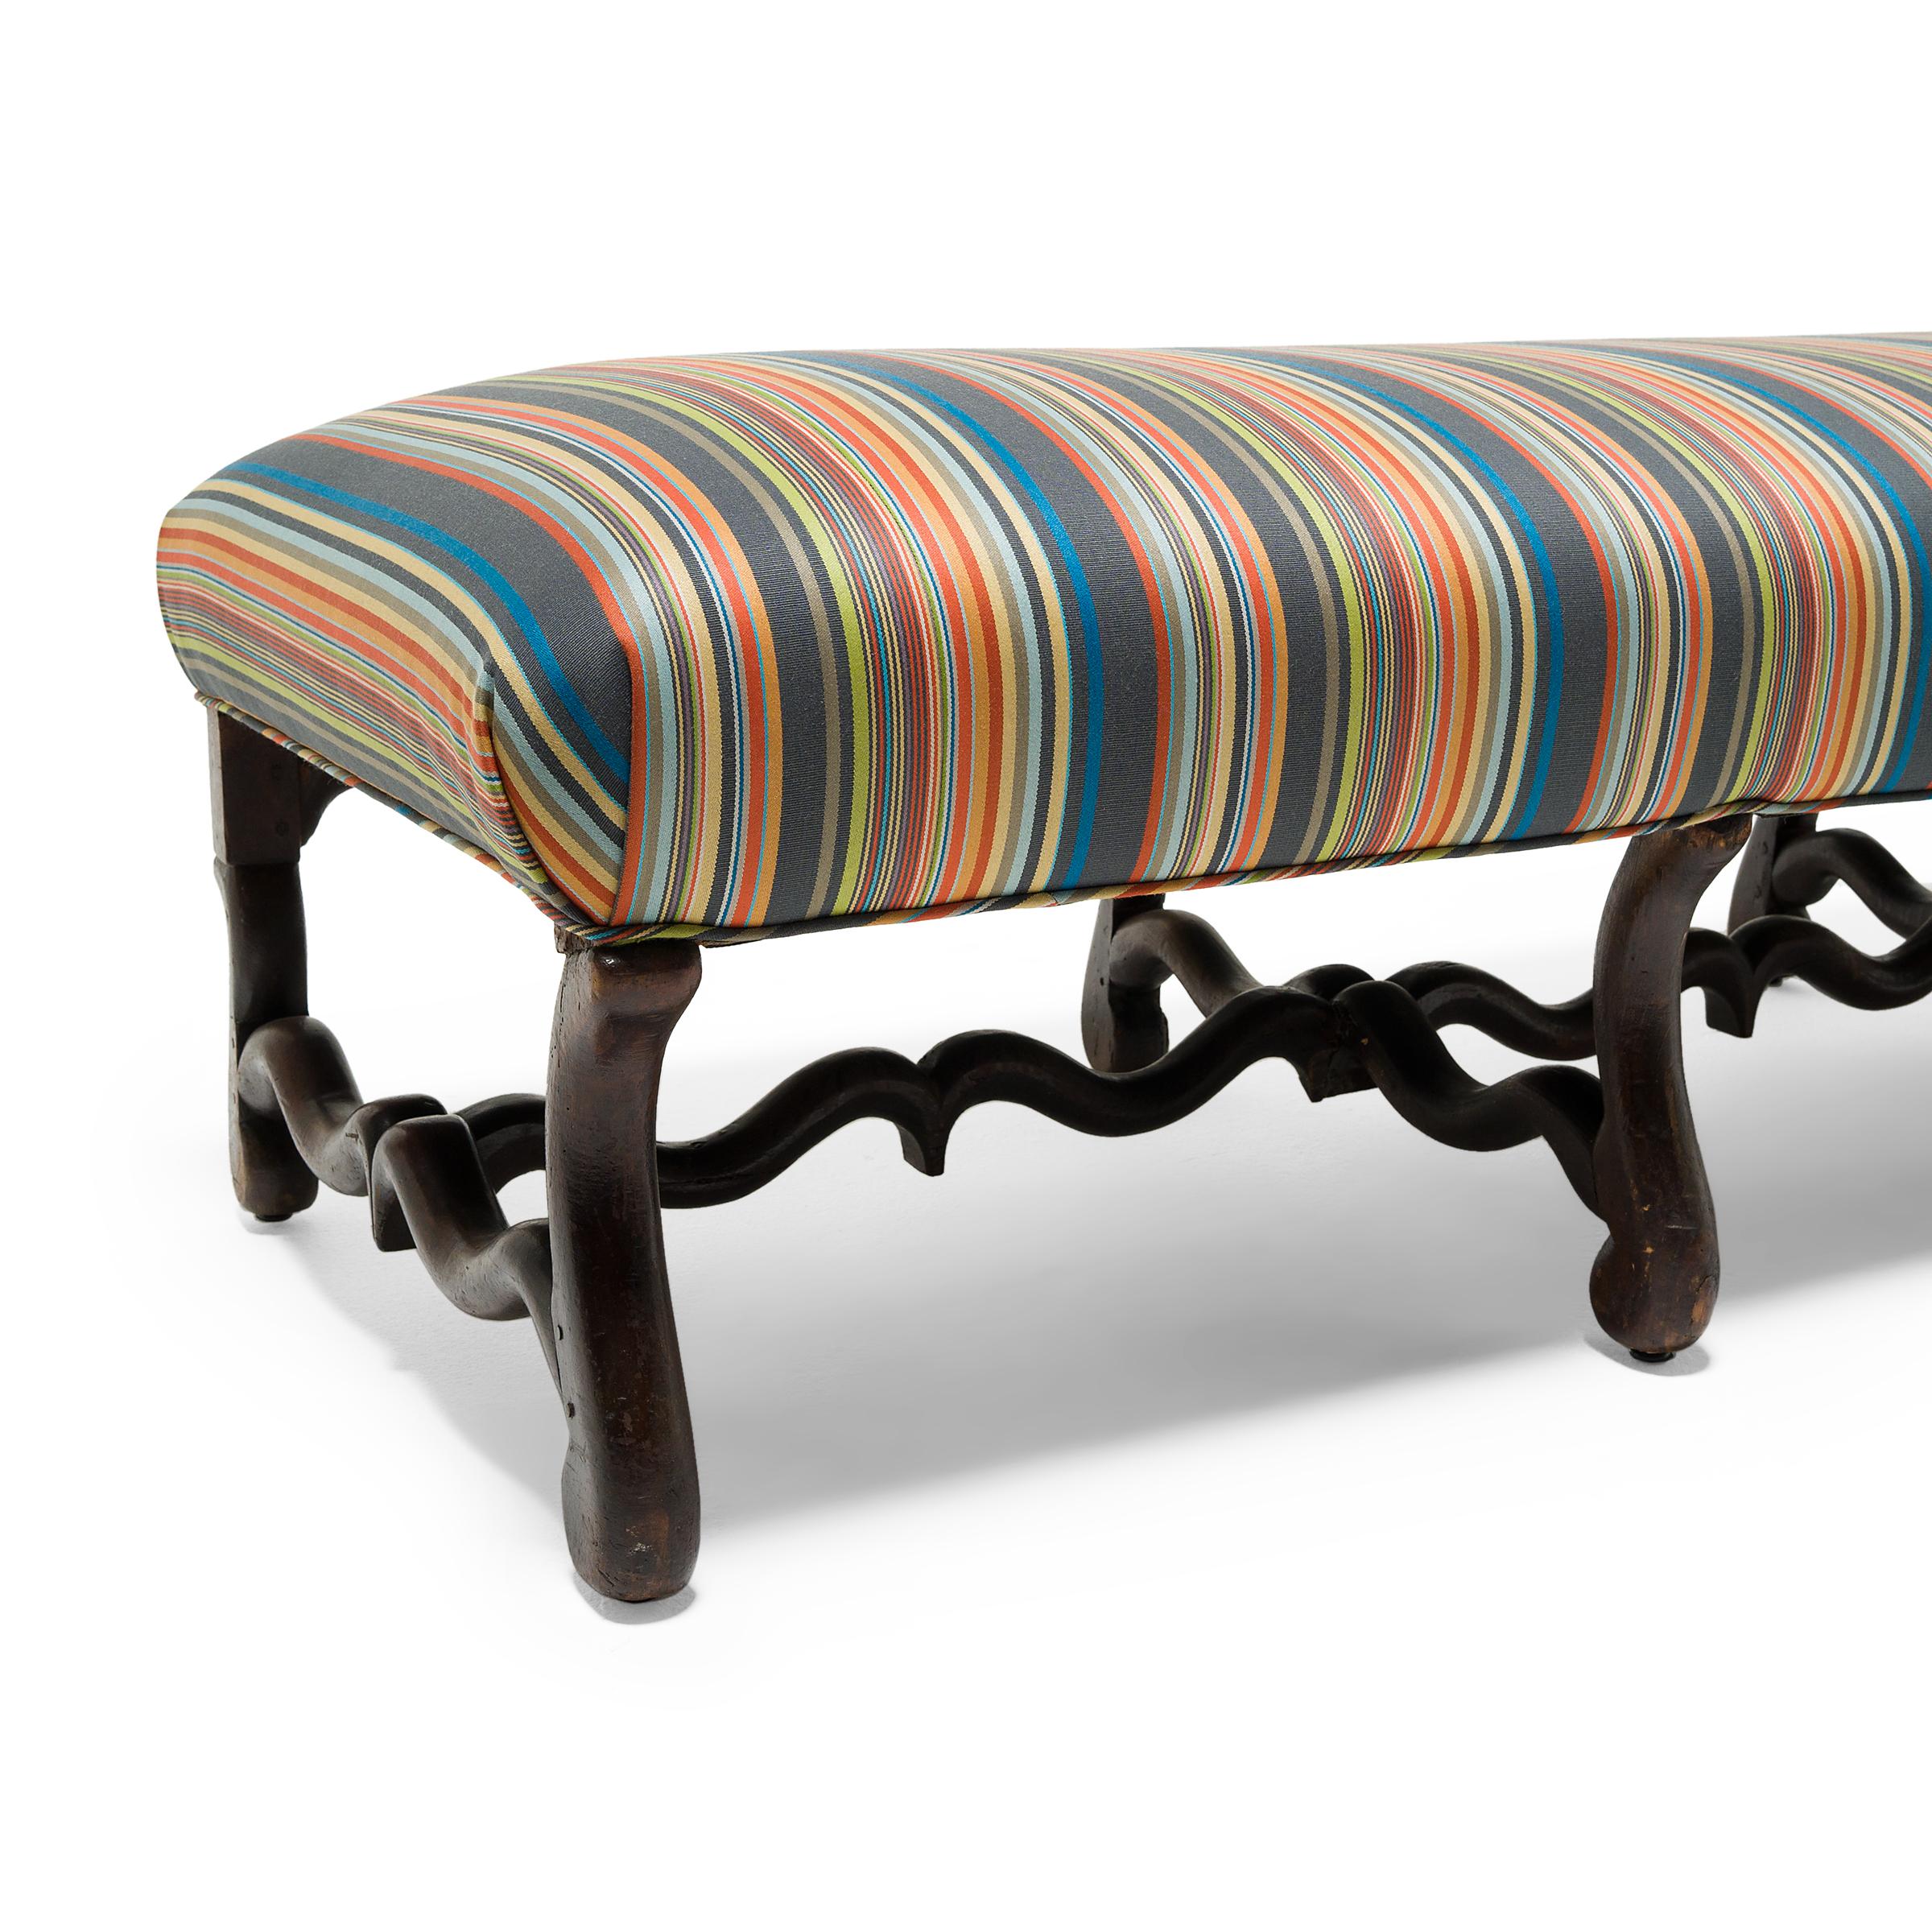 Carved Long Upholstered Os de Mouton Bench, c. 1800 For Sale